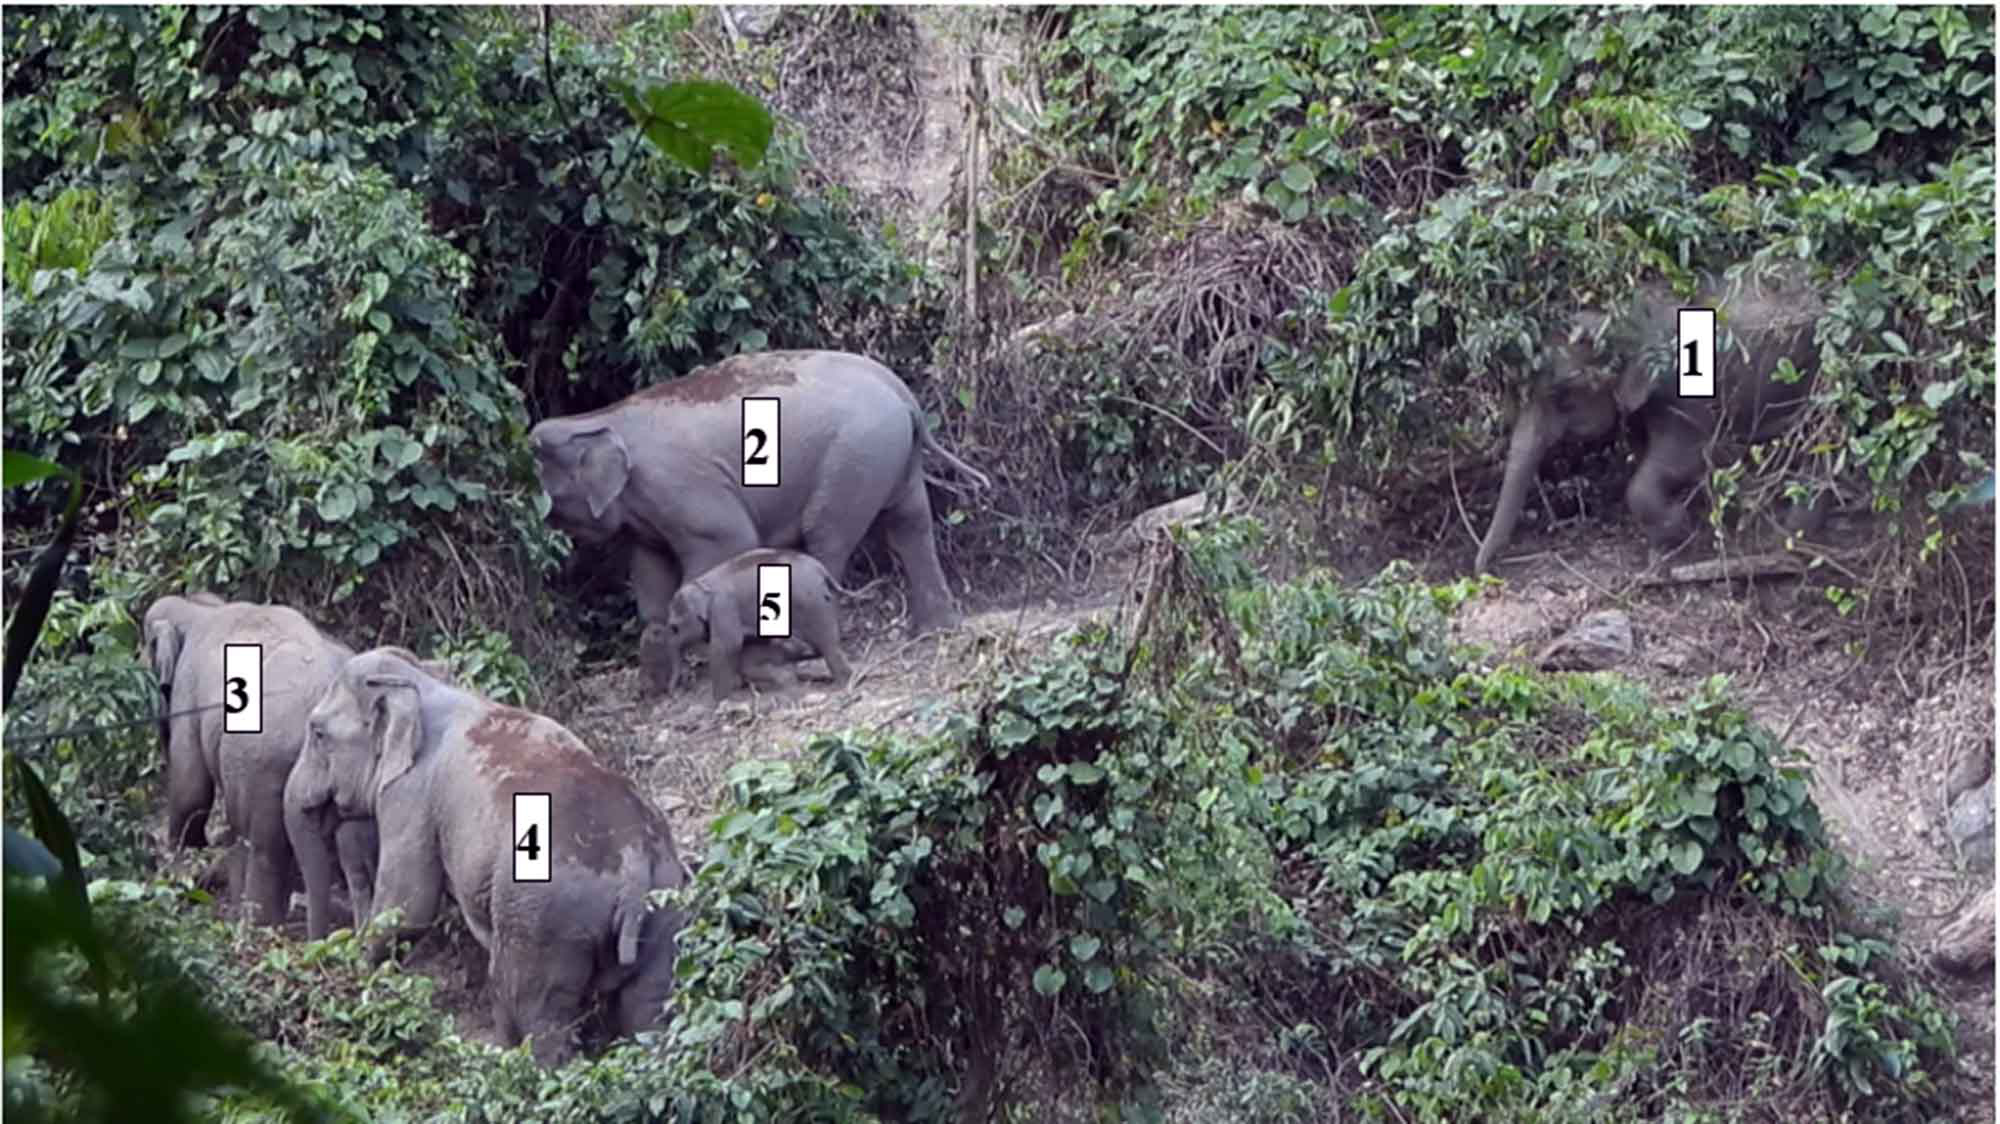 Wild elephants thrive in central Vietnam’s sanctuary